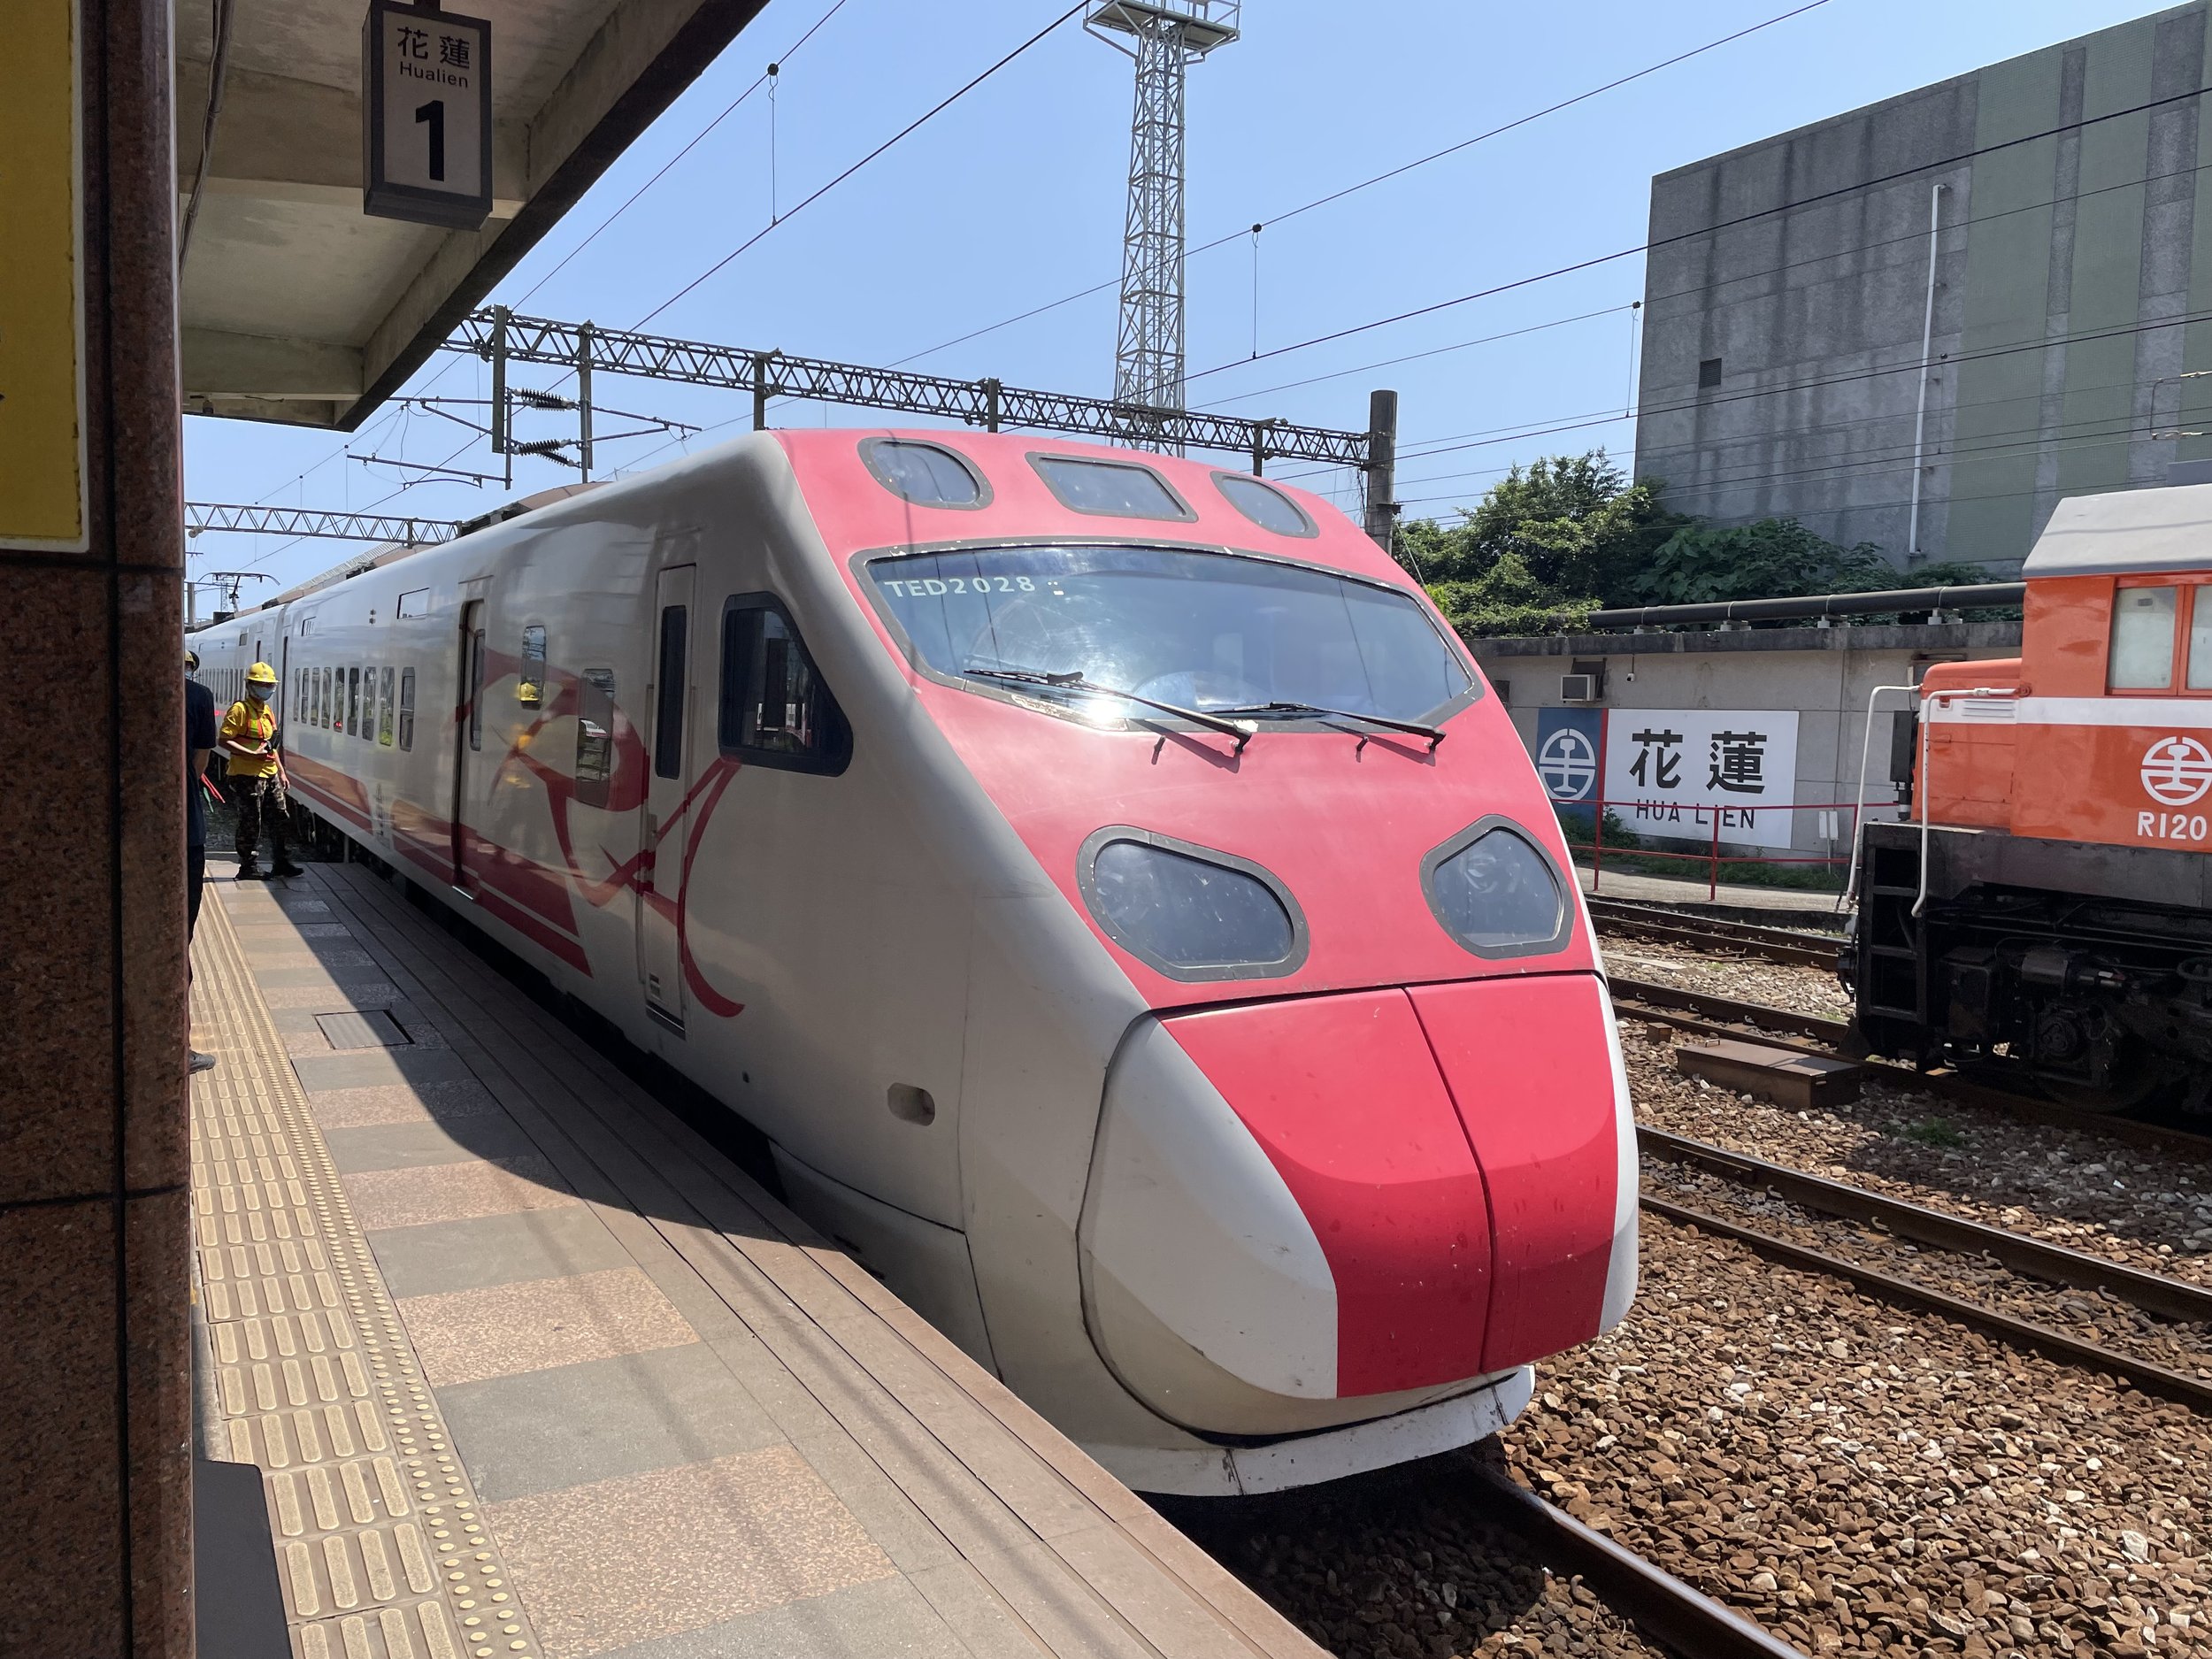 Puyuma Train for Kaohsiung at Hualien Station